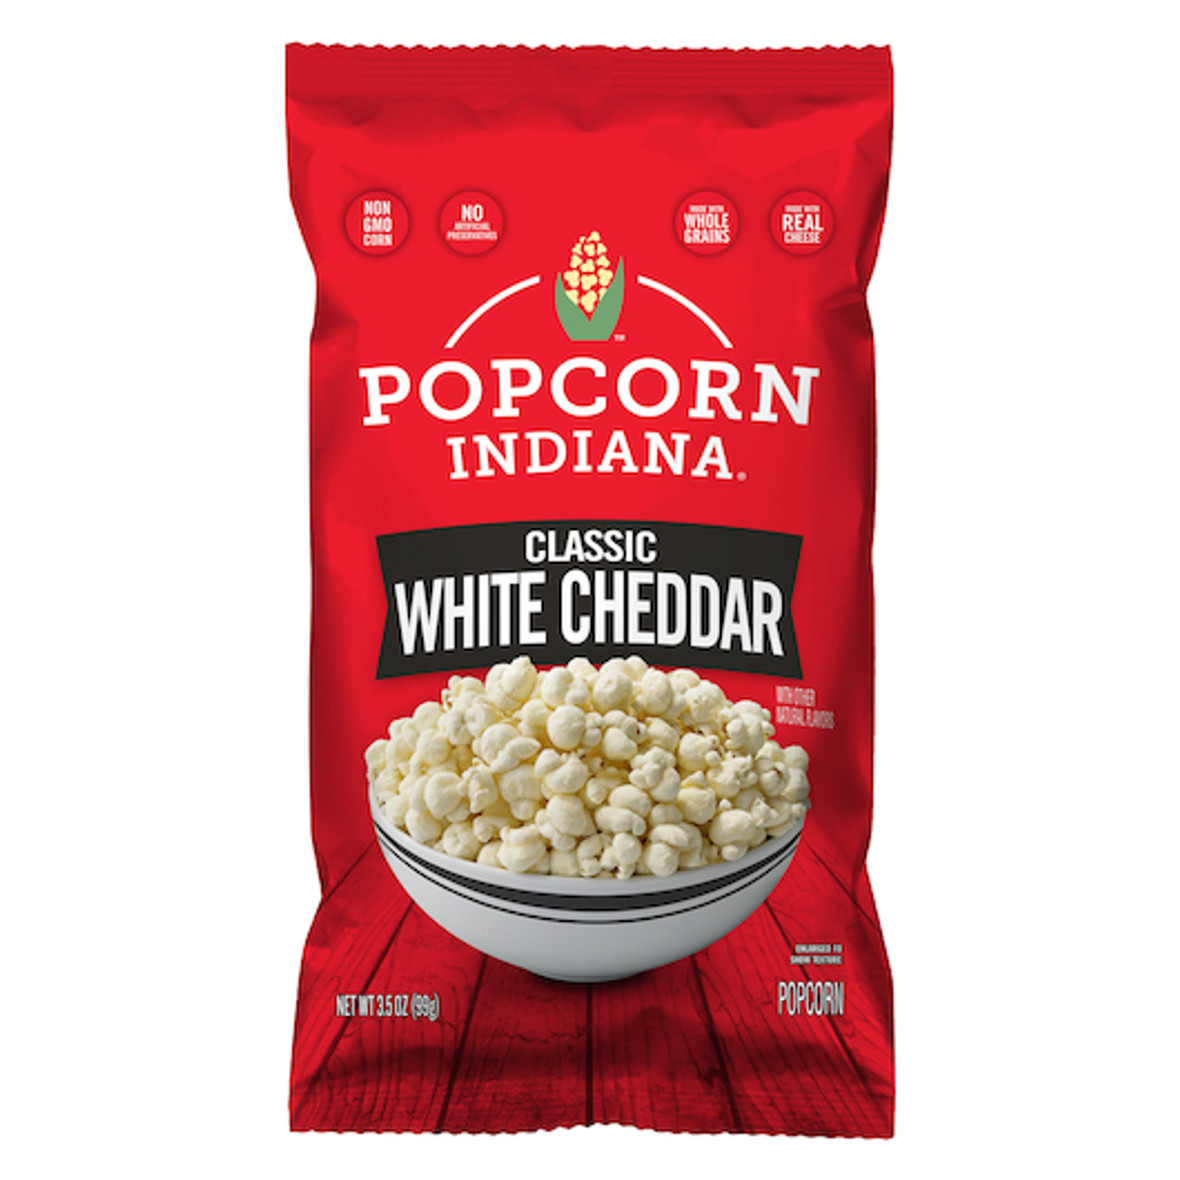 Popcorn Indiana White Cheddar, 3.5 Ounce, 6 Per Case